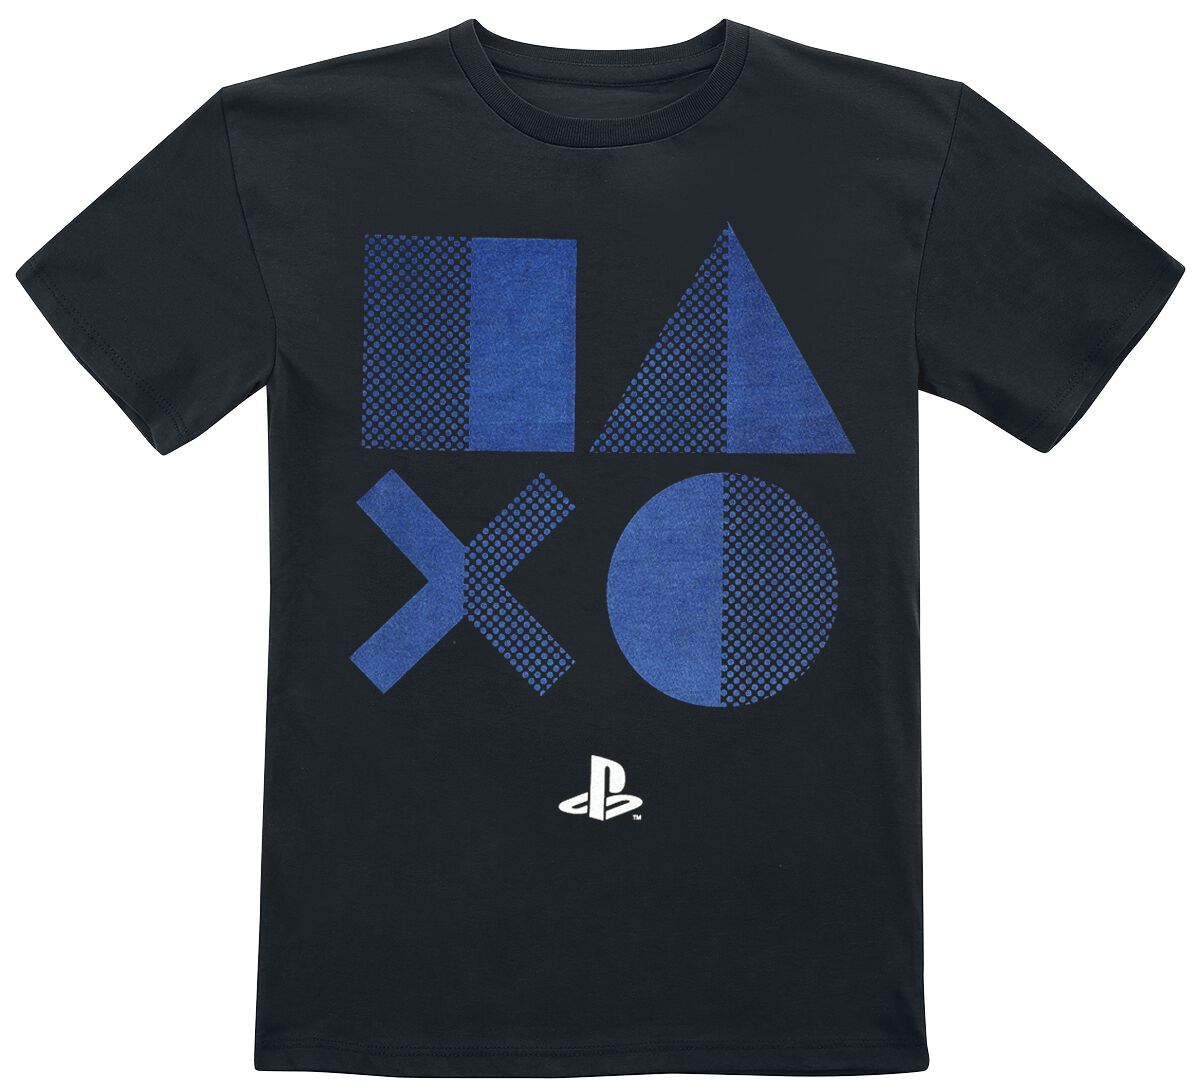 Playstation Kids - Halftone Shapes T-Shirt black